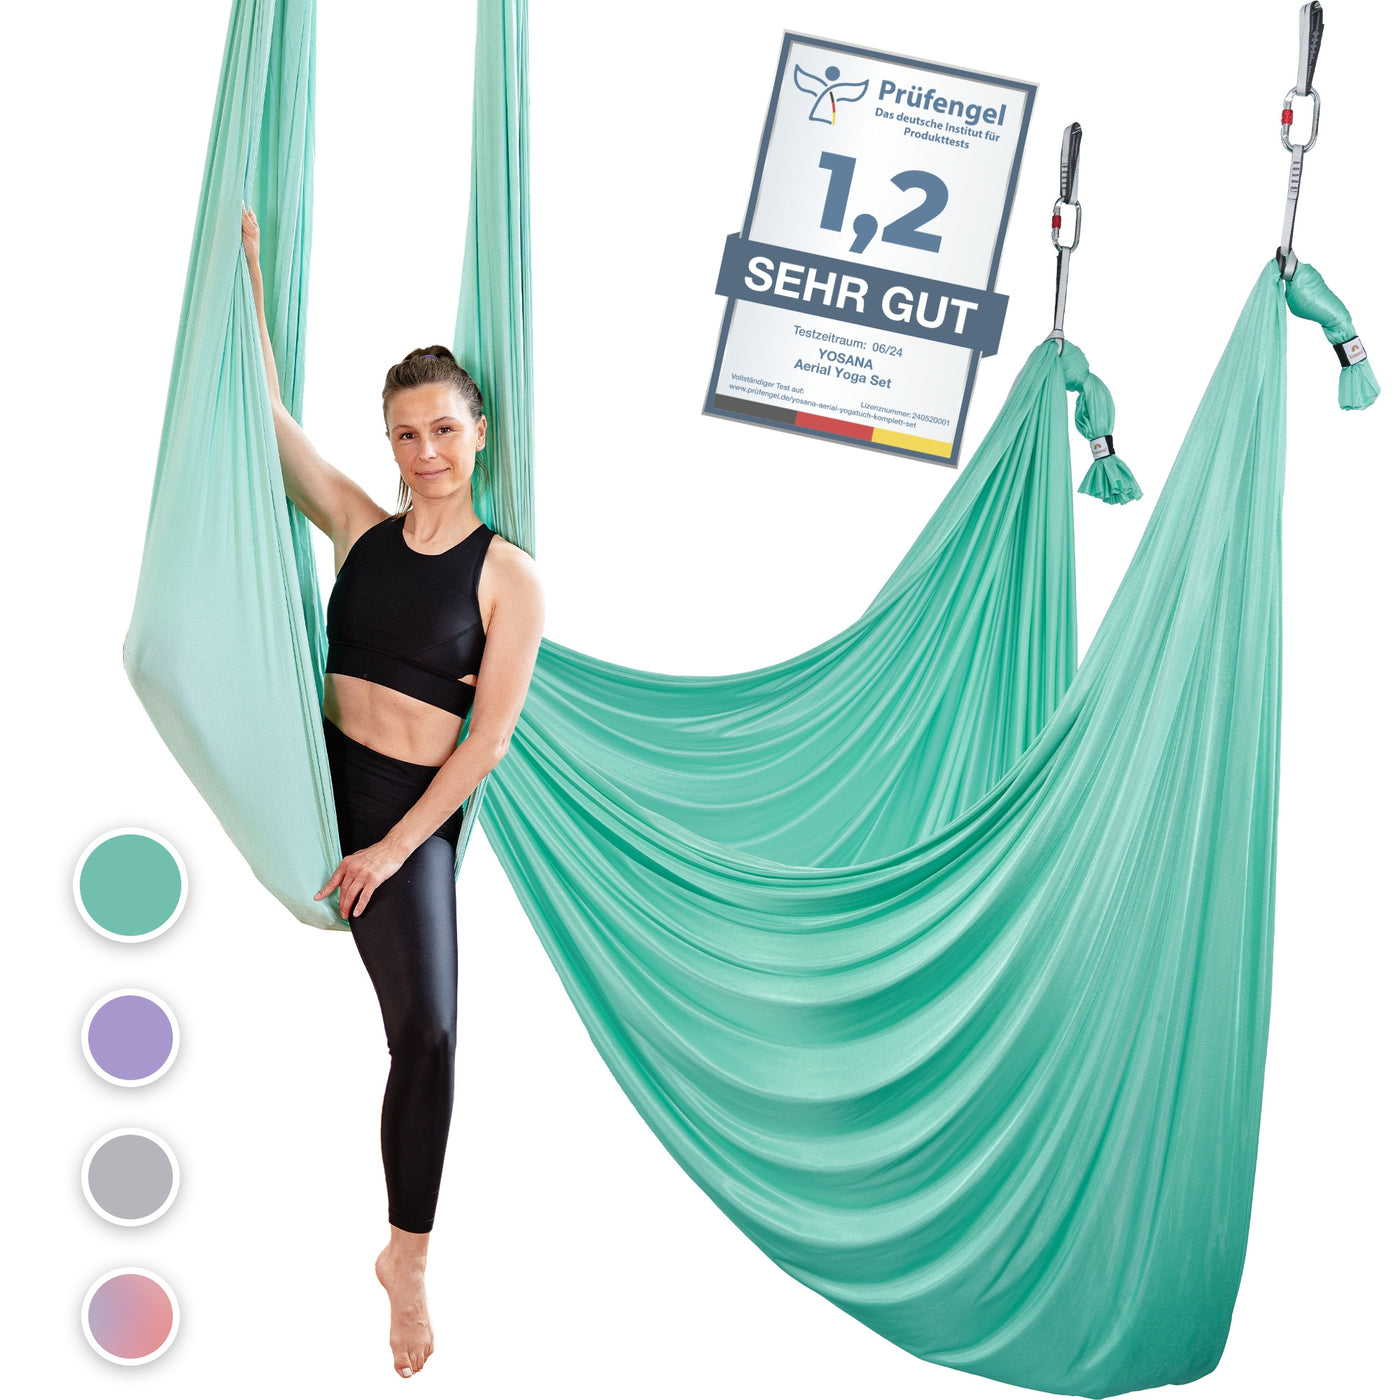 Aerial Yogatuch Komplettset - Farbe Mintgrün